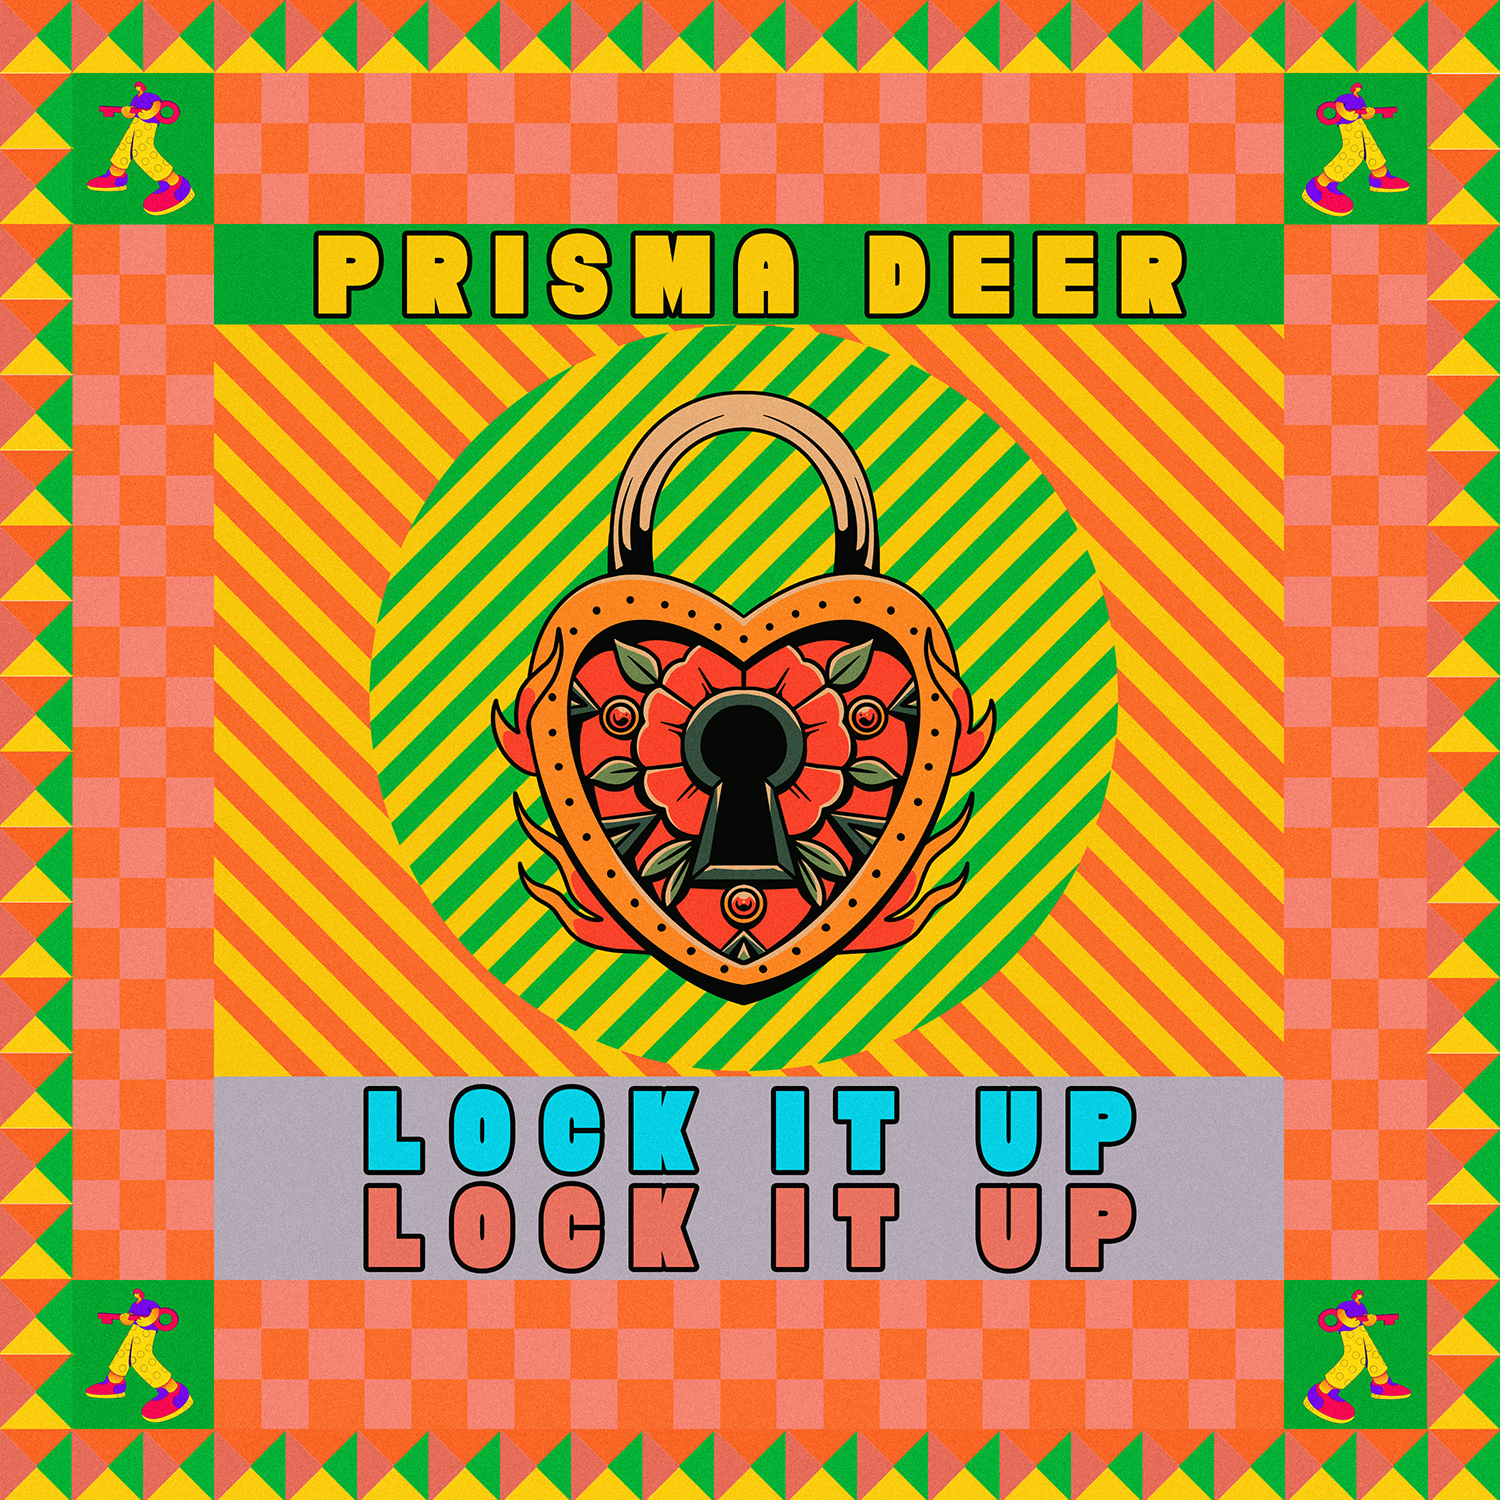 Prisma Deer - Lock It Up (Original Mix)